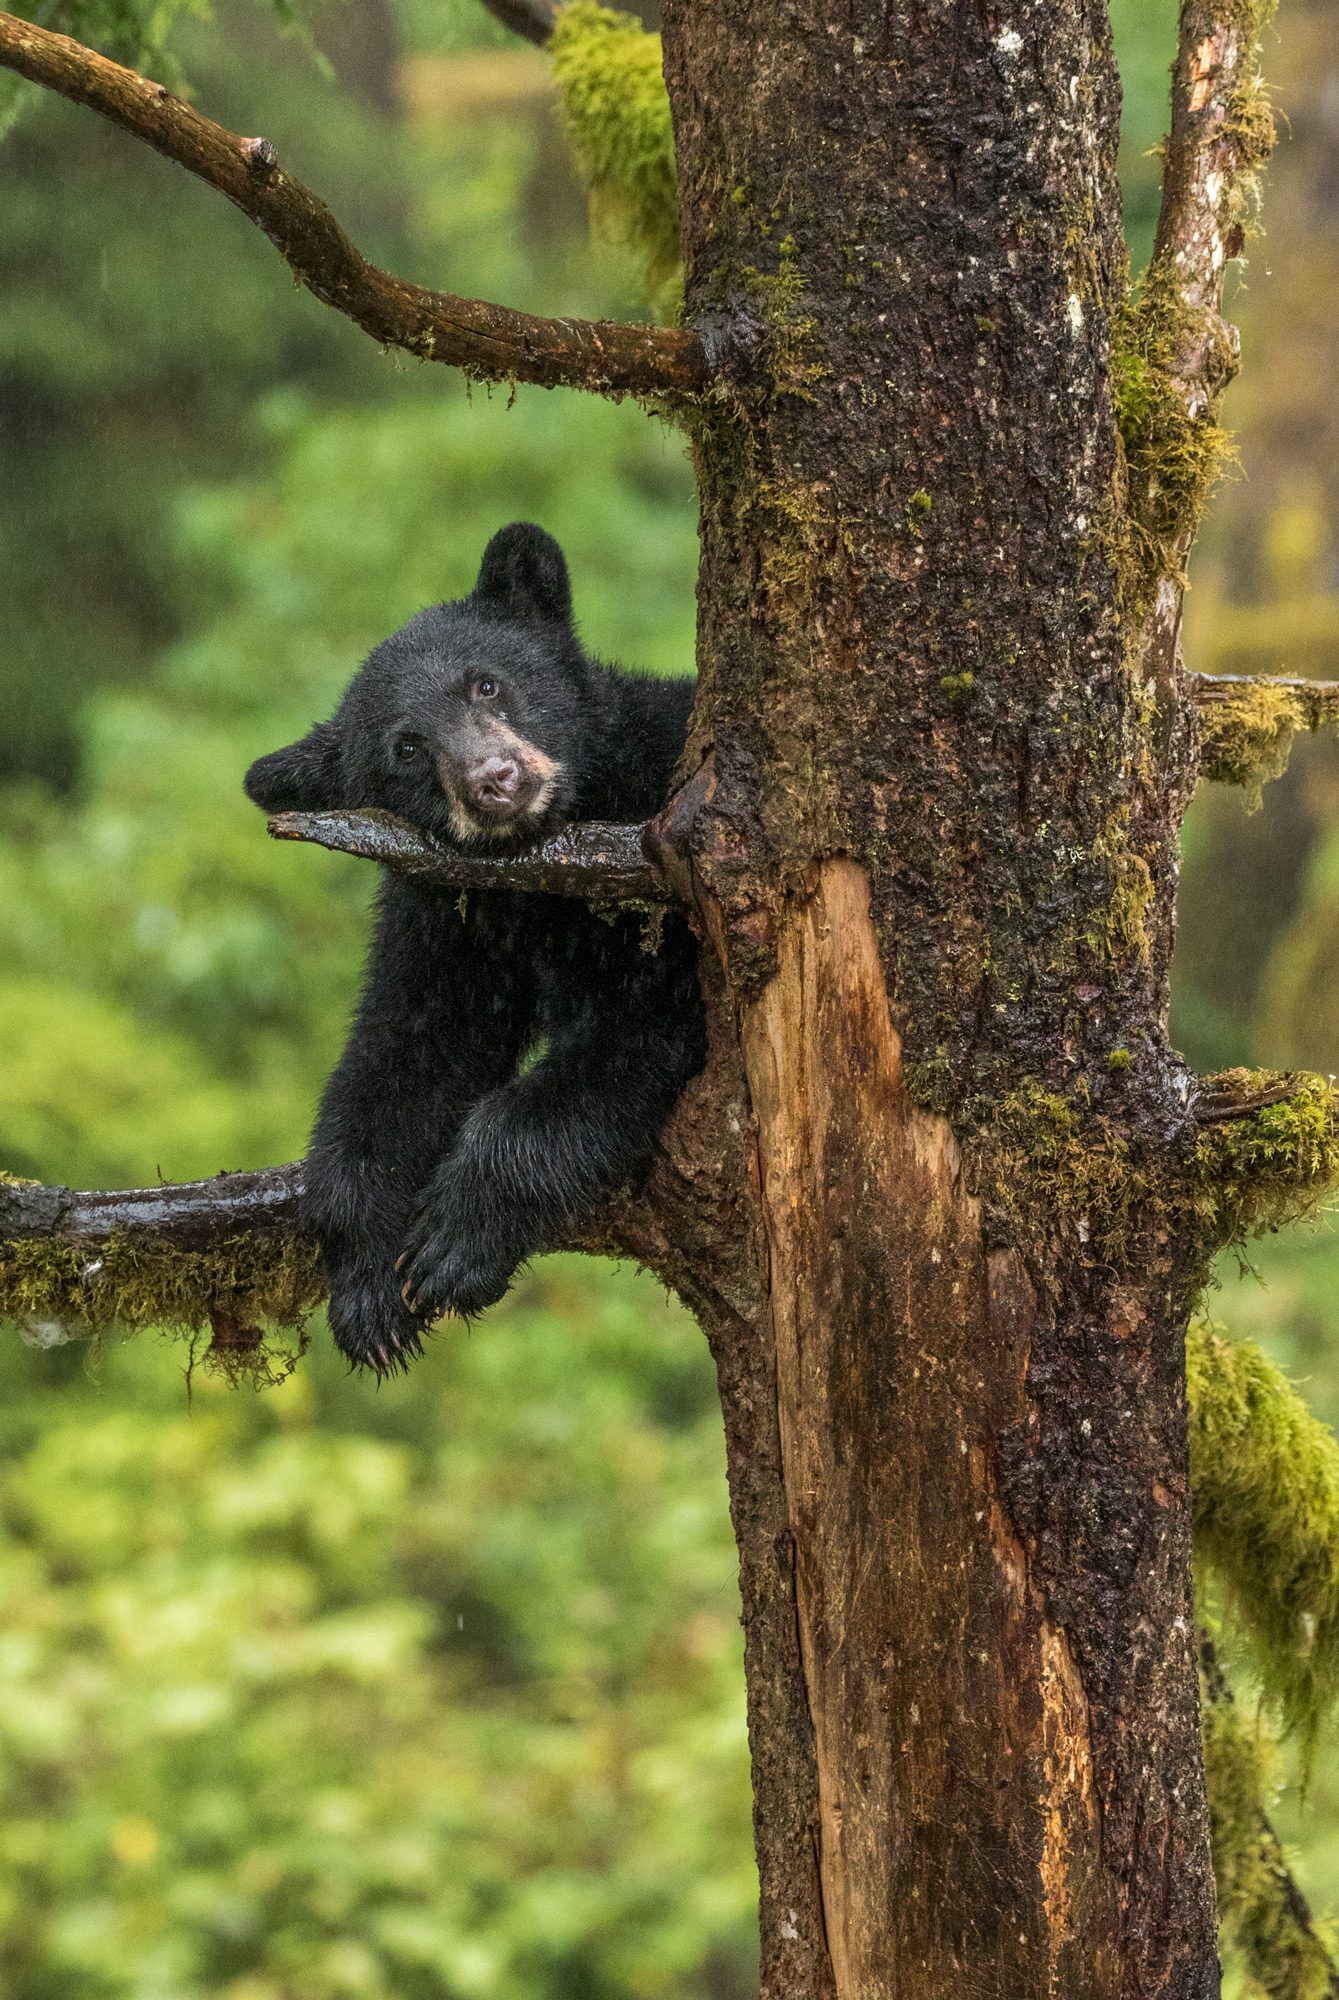 Black bear cub in a tree on a rainy day